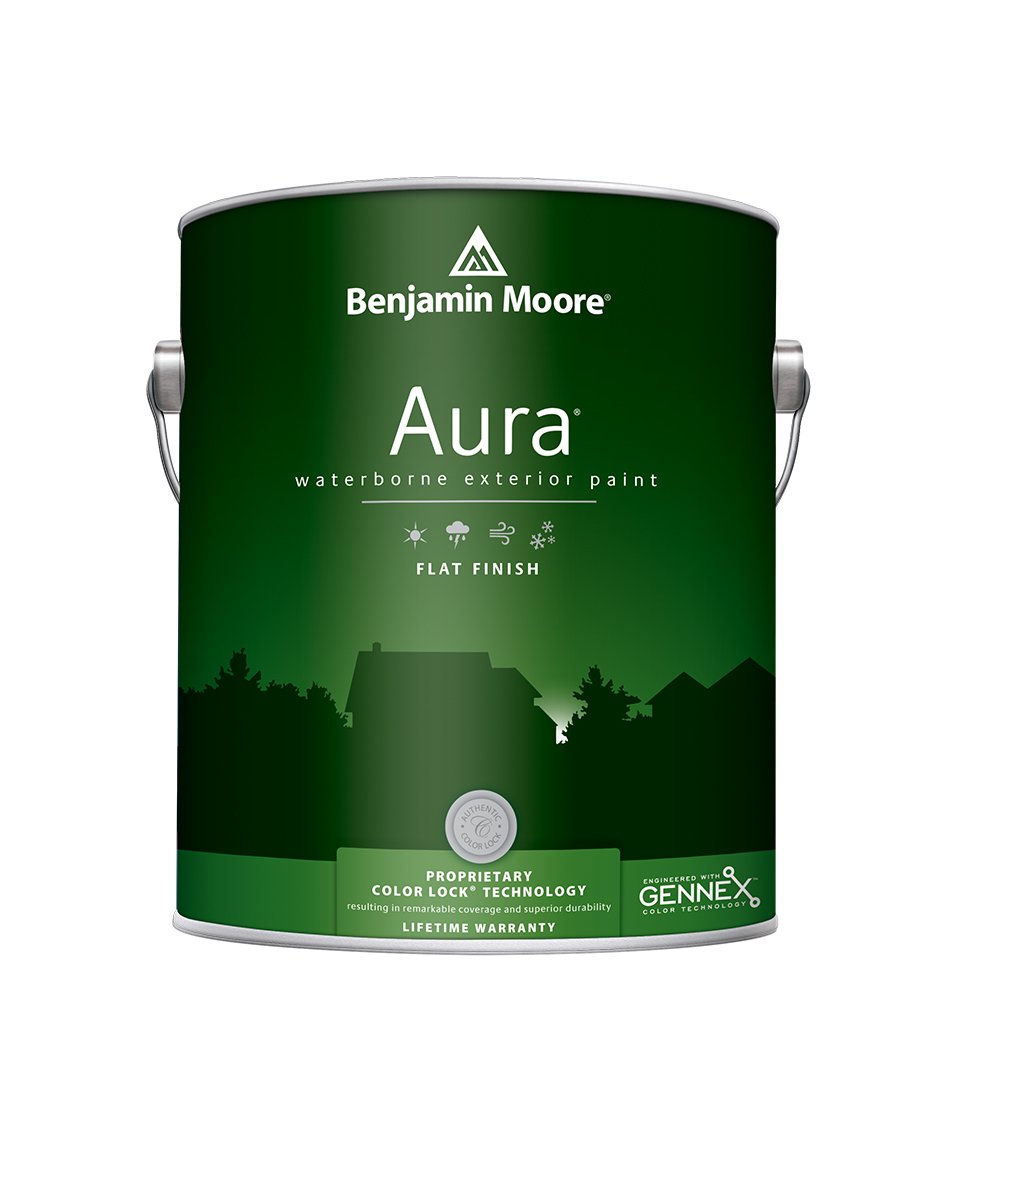 Benjamin Moore Aura® Exterior Paint in a Flat finish at Southwestern Paint Houston, TX.